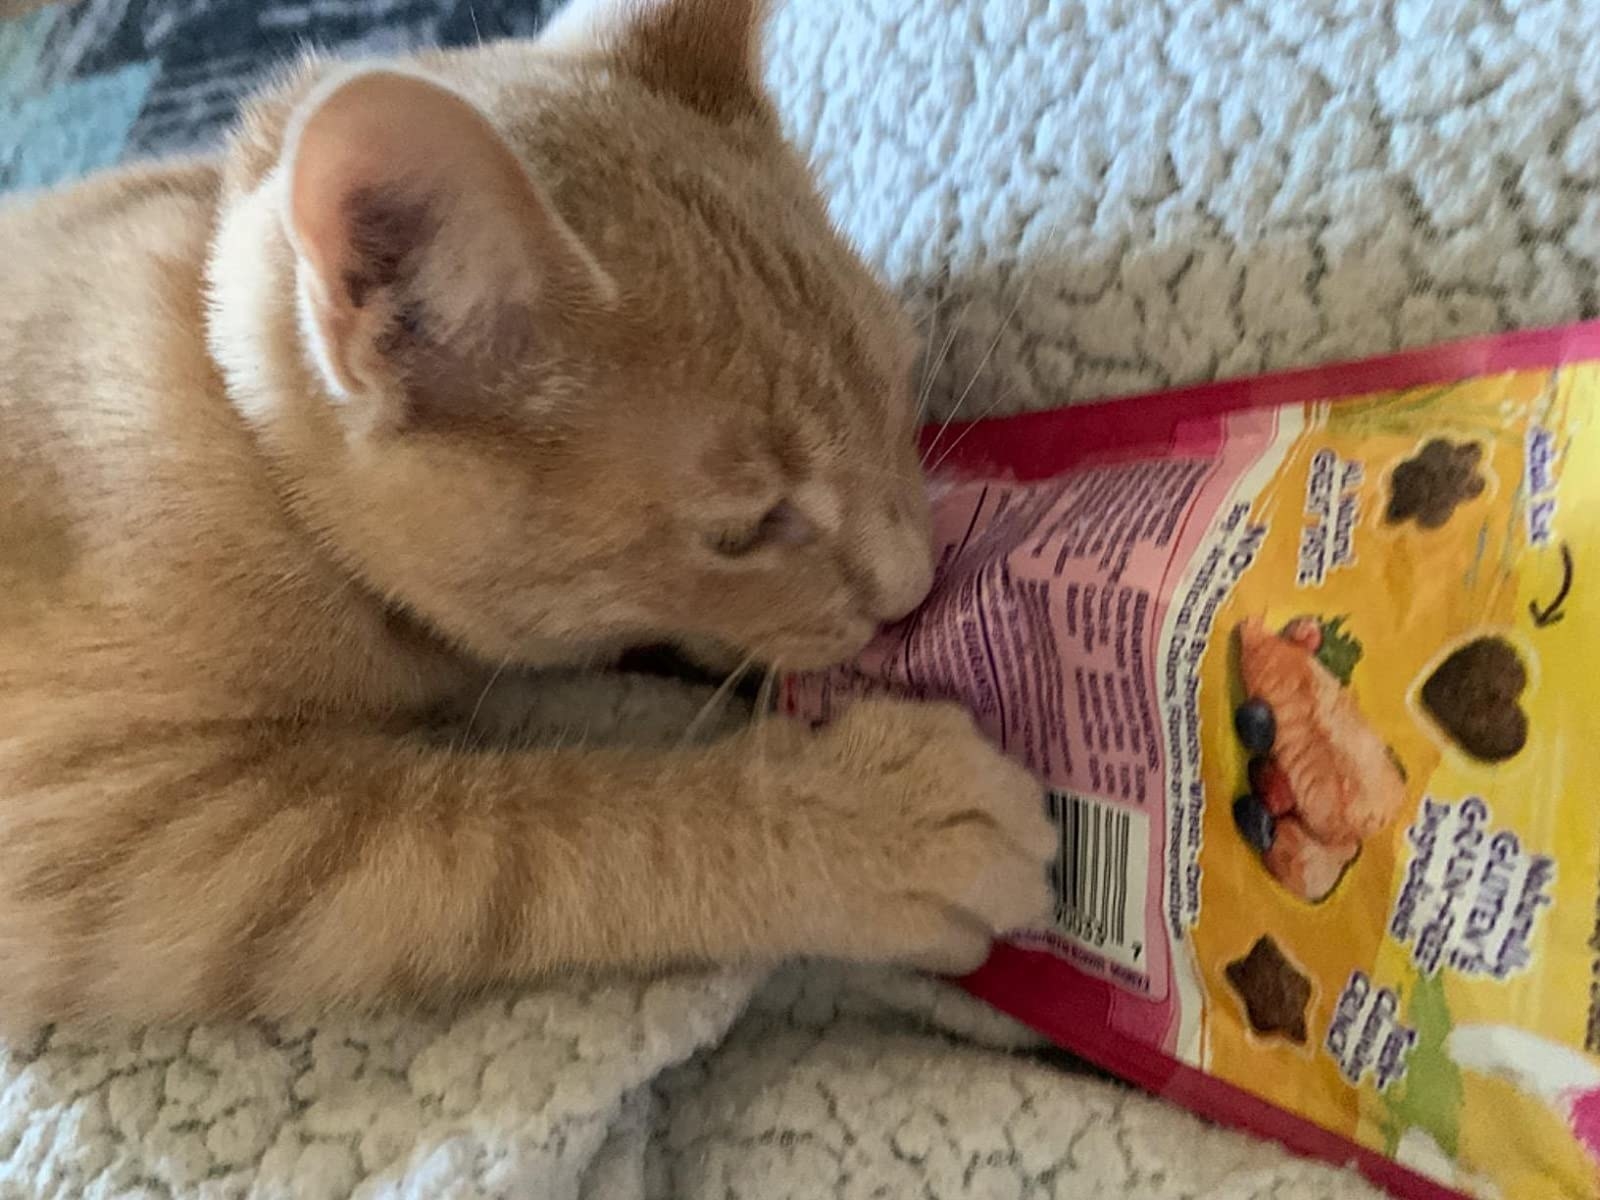 Review photo of cat enjoying the treats